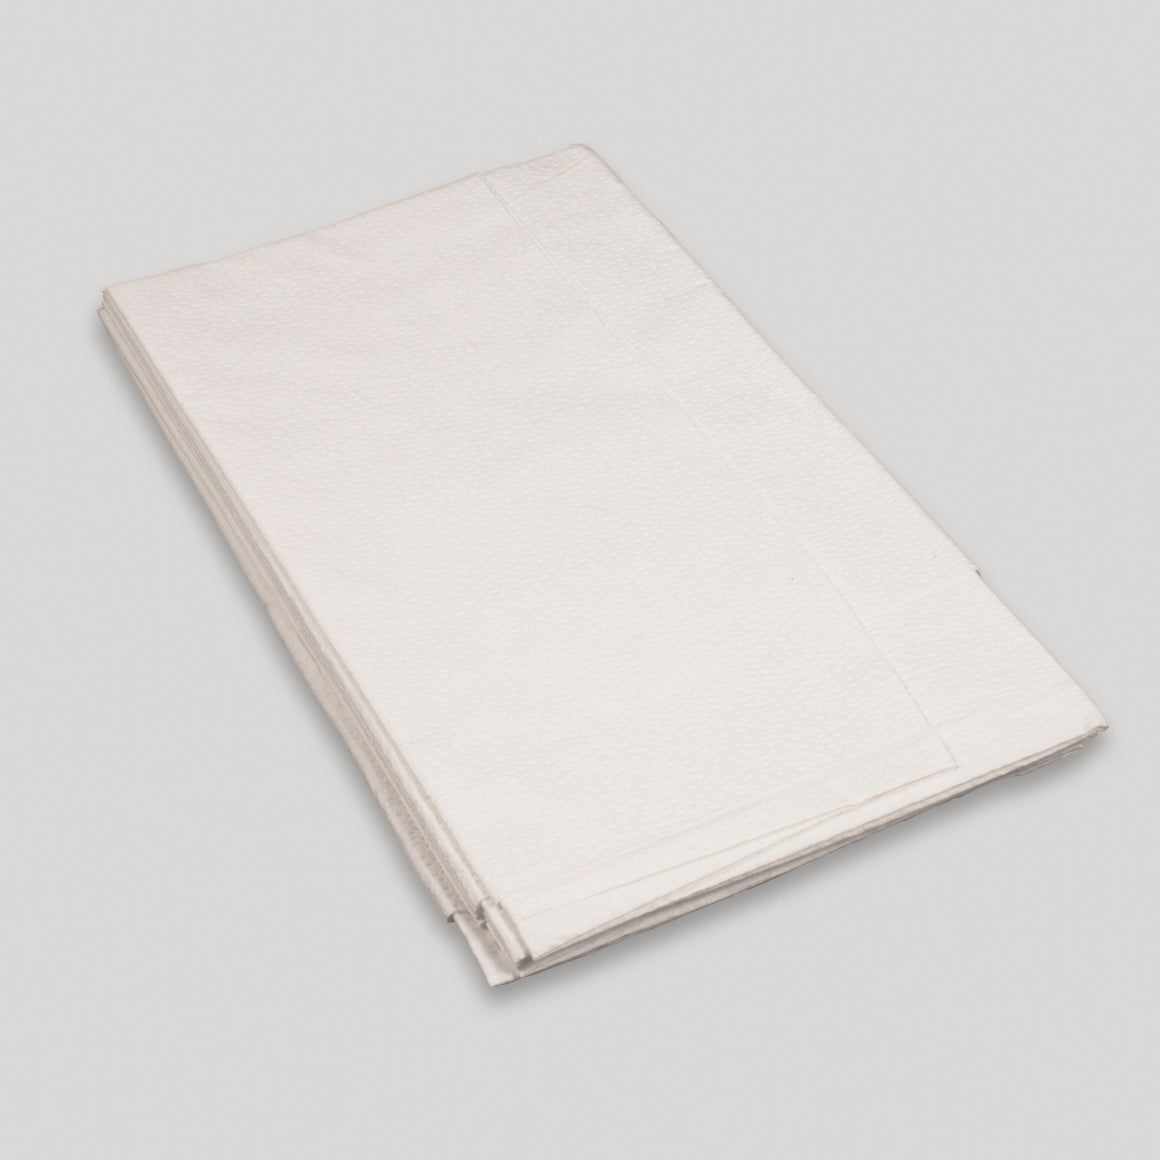 Dynarex #8121 Exam Drape Sheets 40×48 – 100 per case - fhmedicalservices